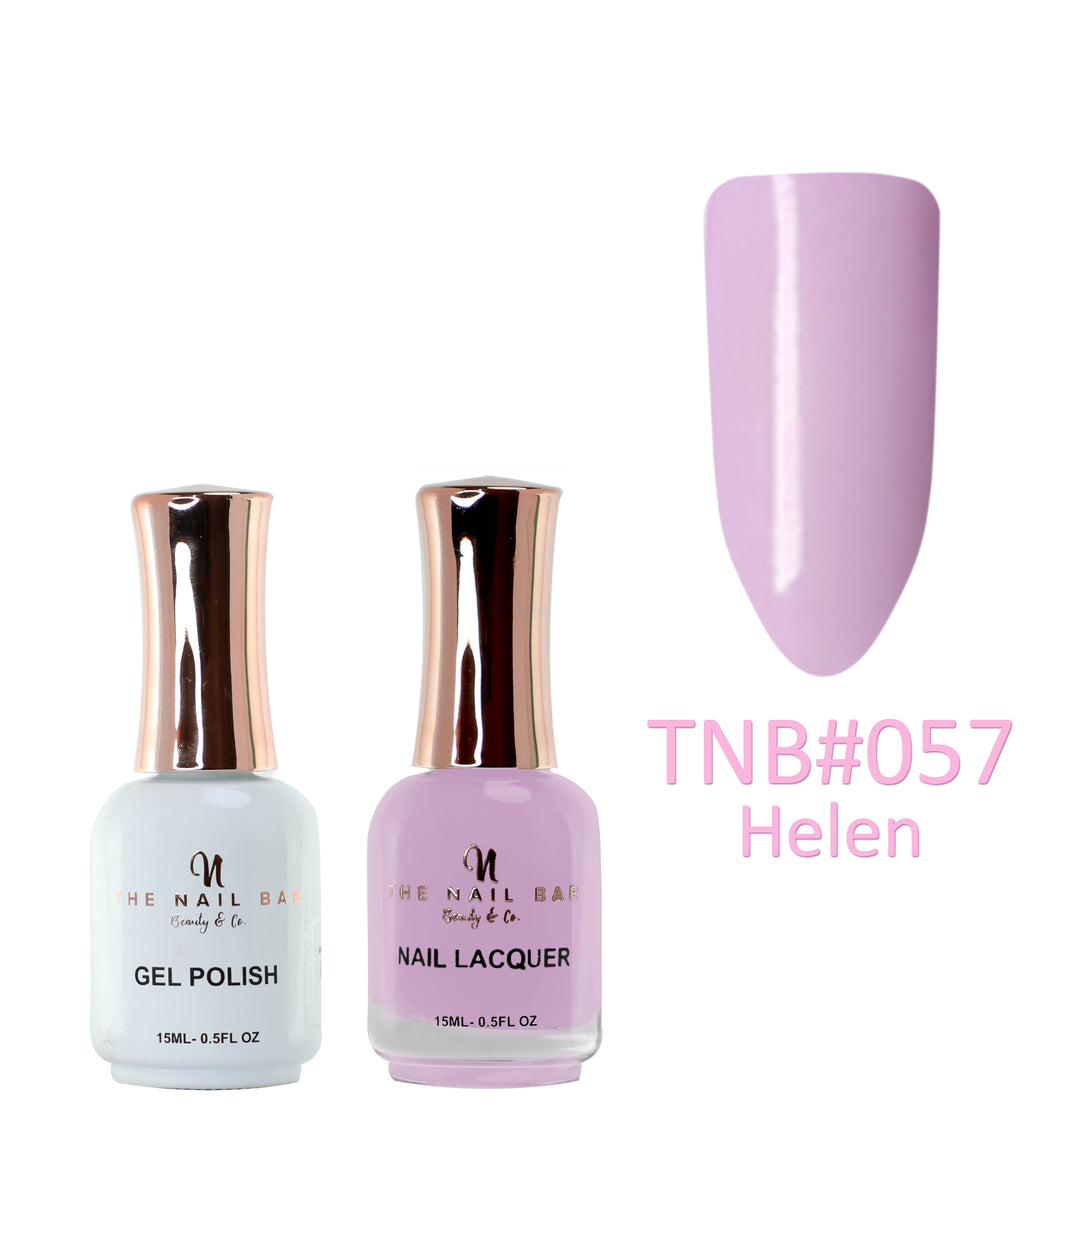 Dual Polish/Gel colour matching (15ml) - Helen - The Nail Bar Beauty & Co.